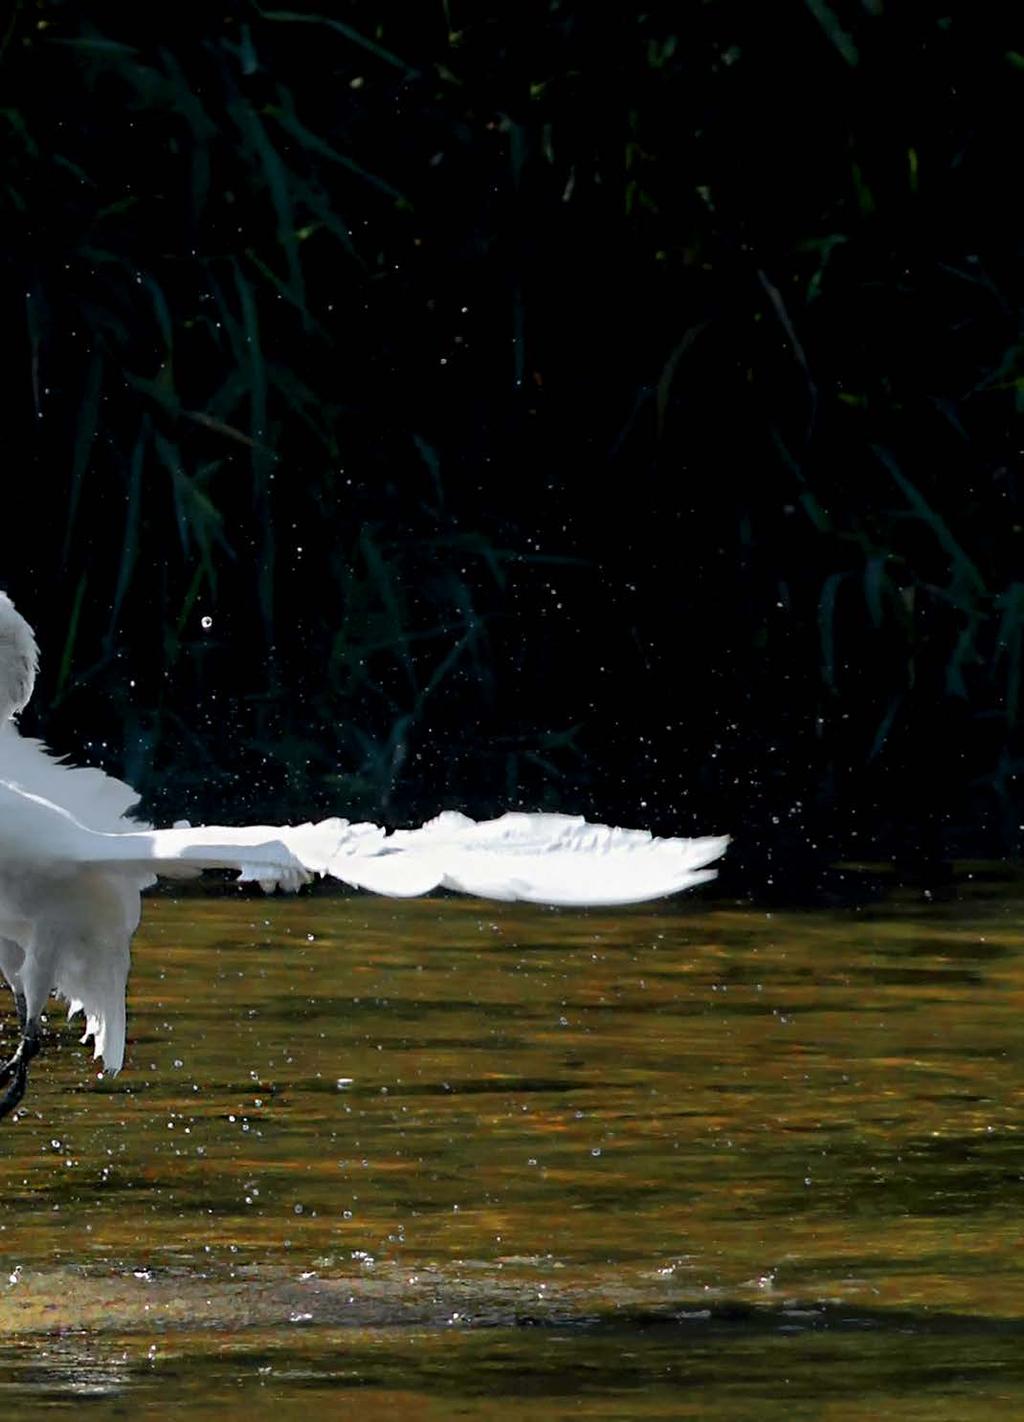 Mala bela čaplja (Egretta